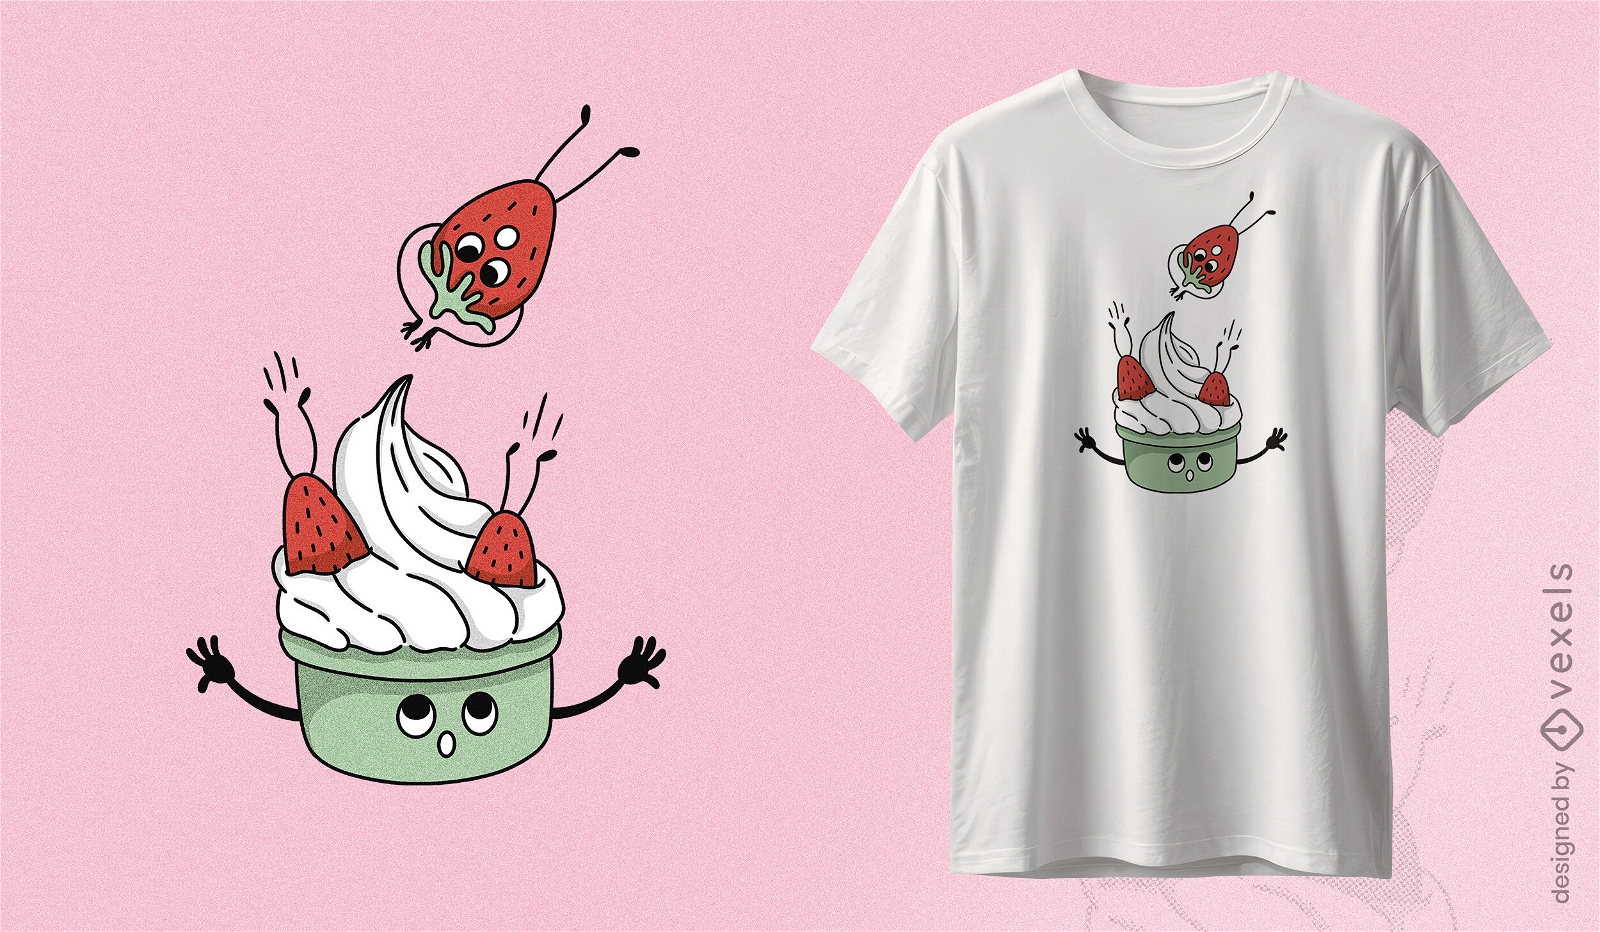 Dise?o de camiseta divertido de fresas y crema Dise?o de camiseta caprichoso que presenta fresas alegres saltando a un taz?n de crema con expresiones faciales divertidas.